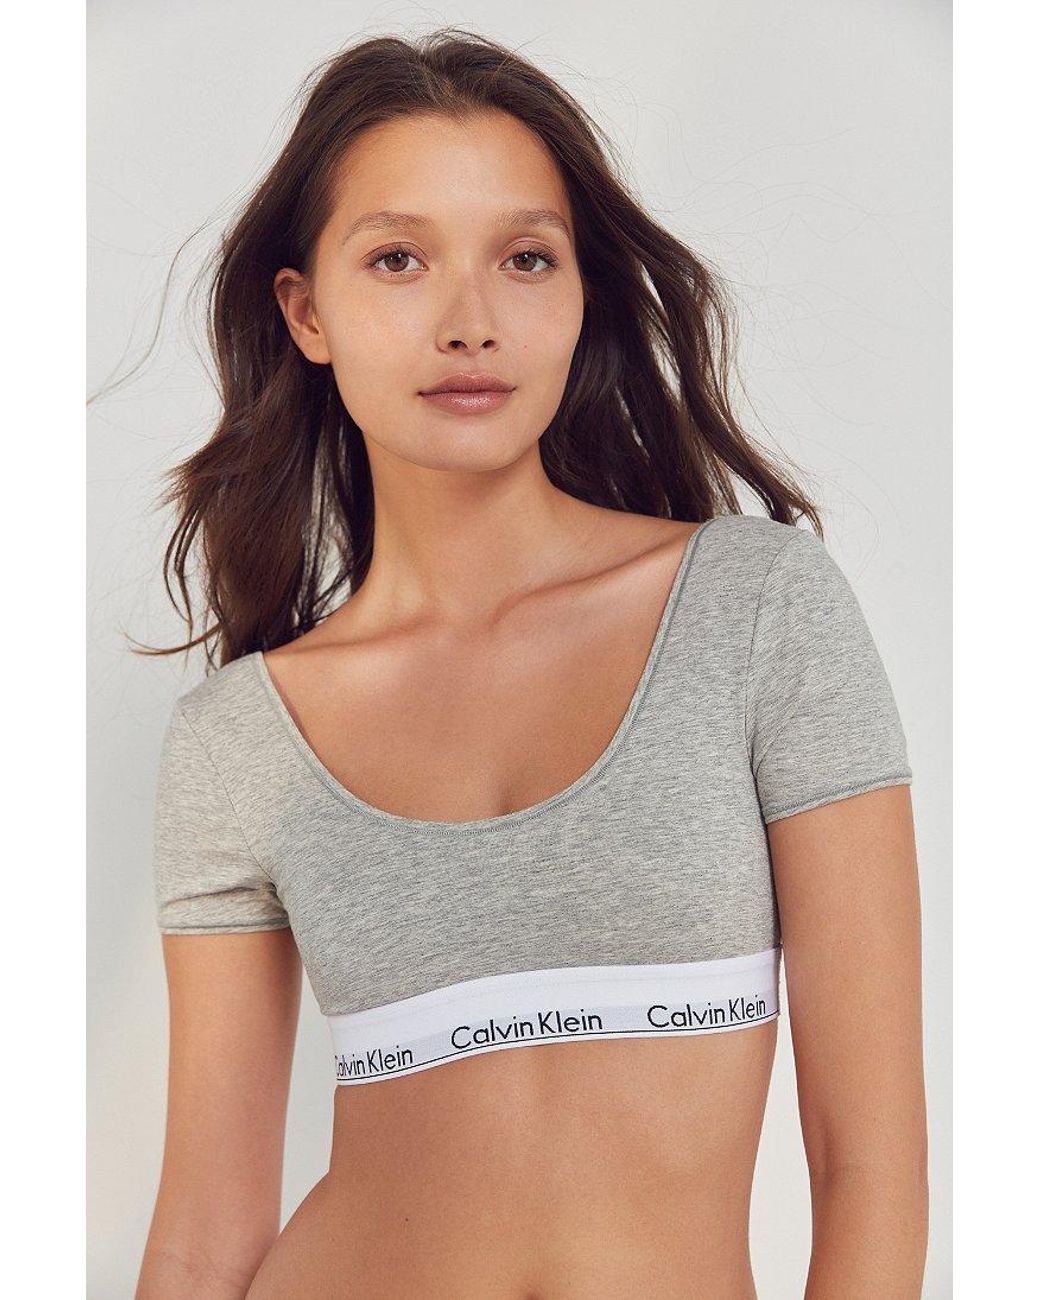 Calvin Klein bra, size M, grey, Women's Fashion, Tops, Blouses on